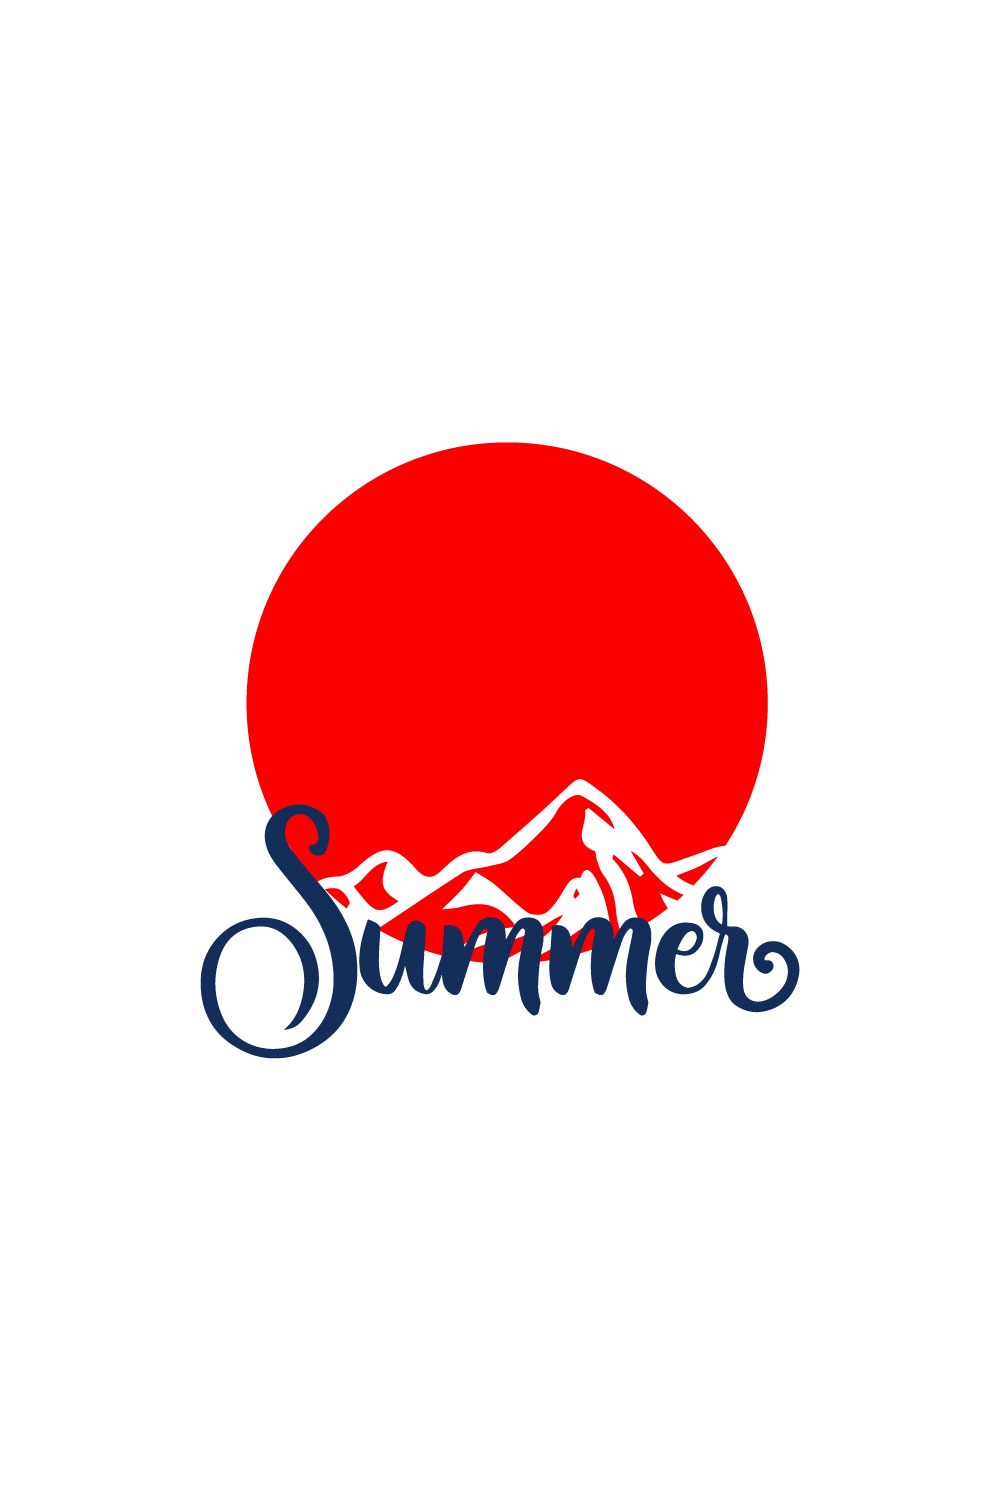 Free Sunset Summer Mountain Logo pinterest preview image.